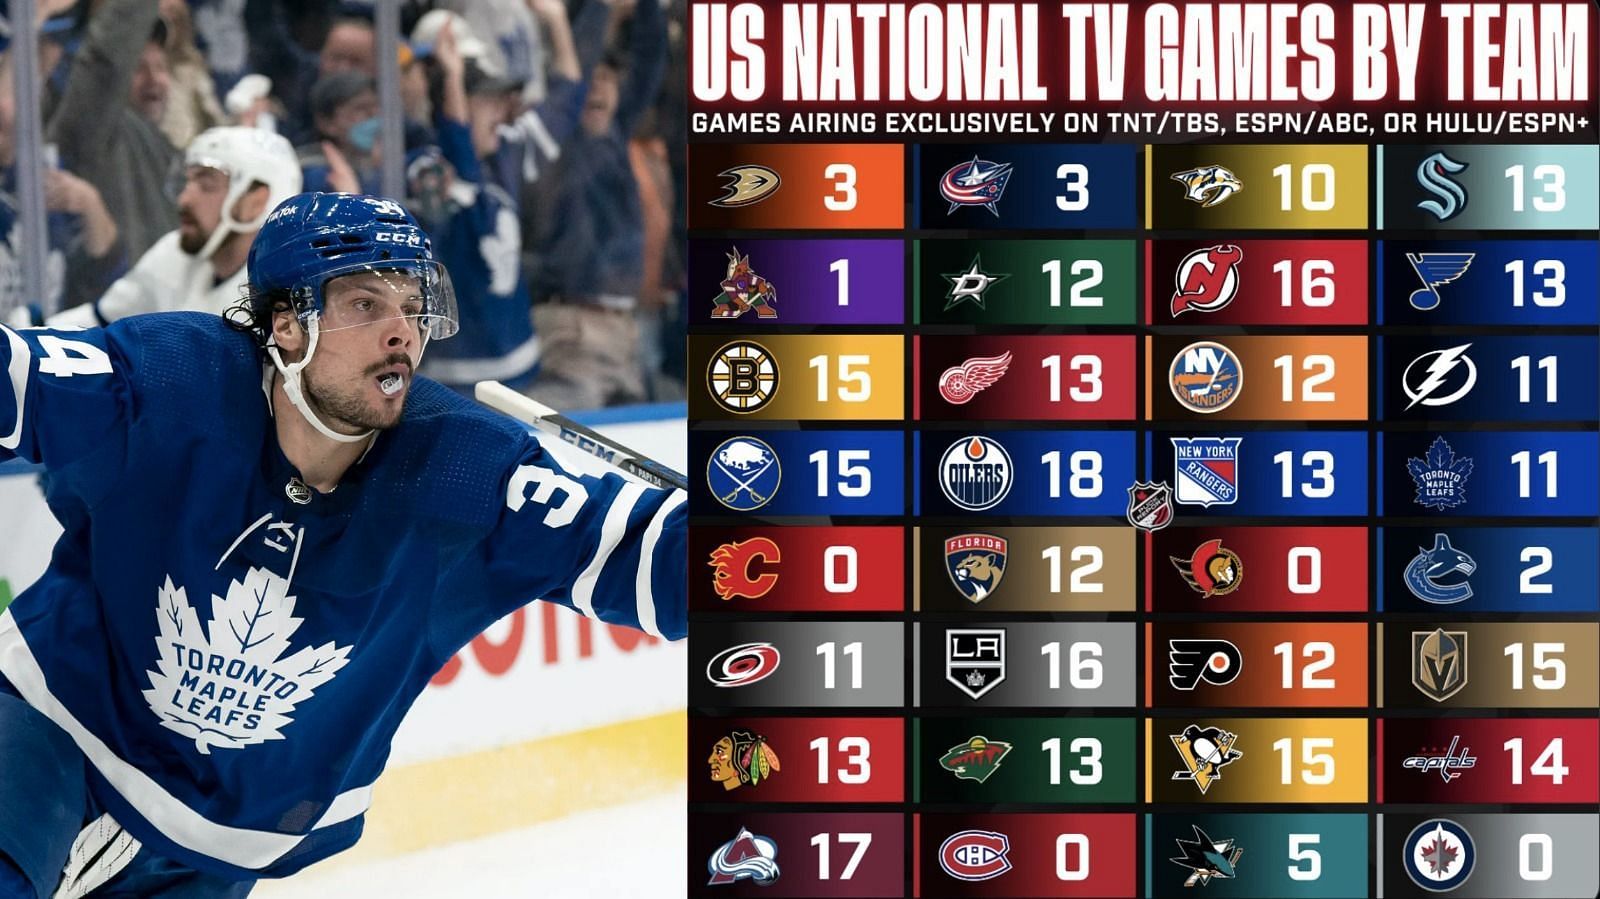 hockey games on tv tonight